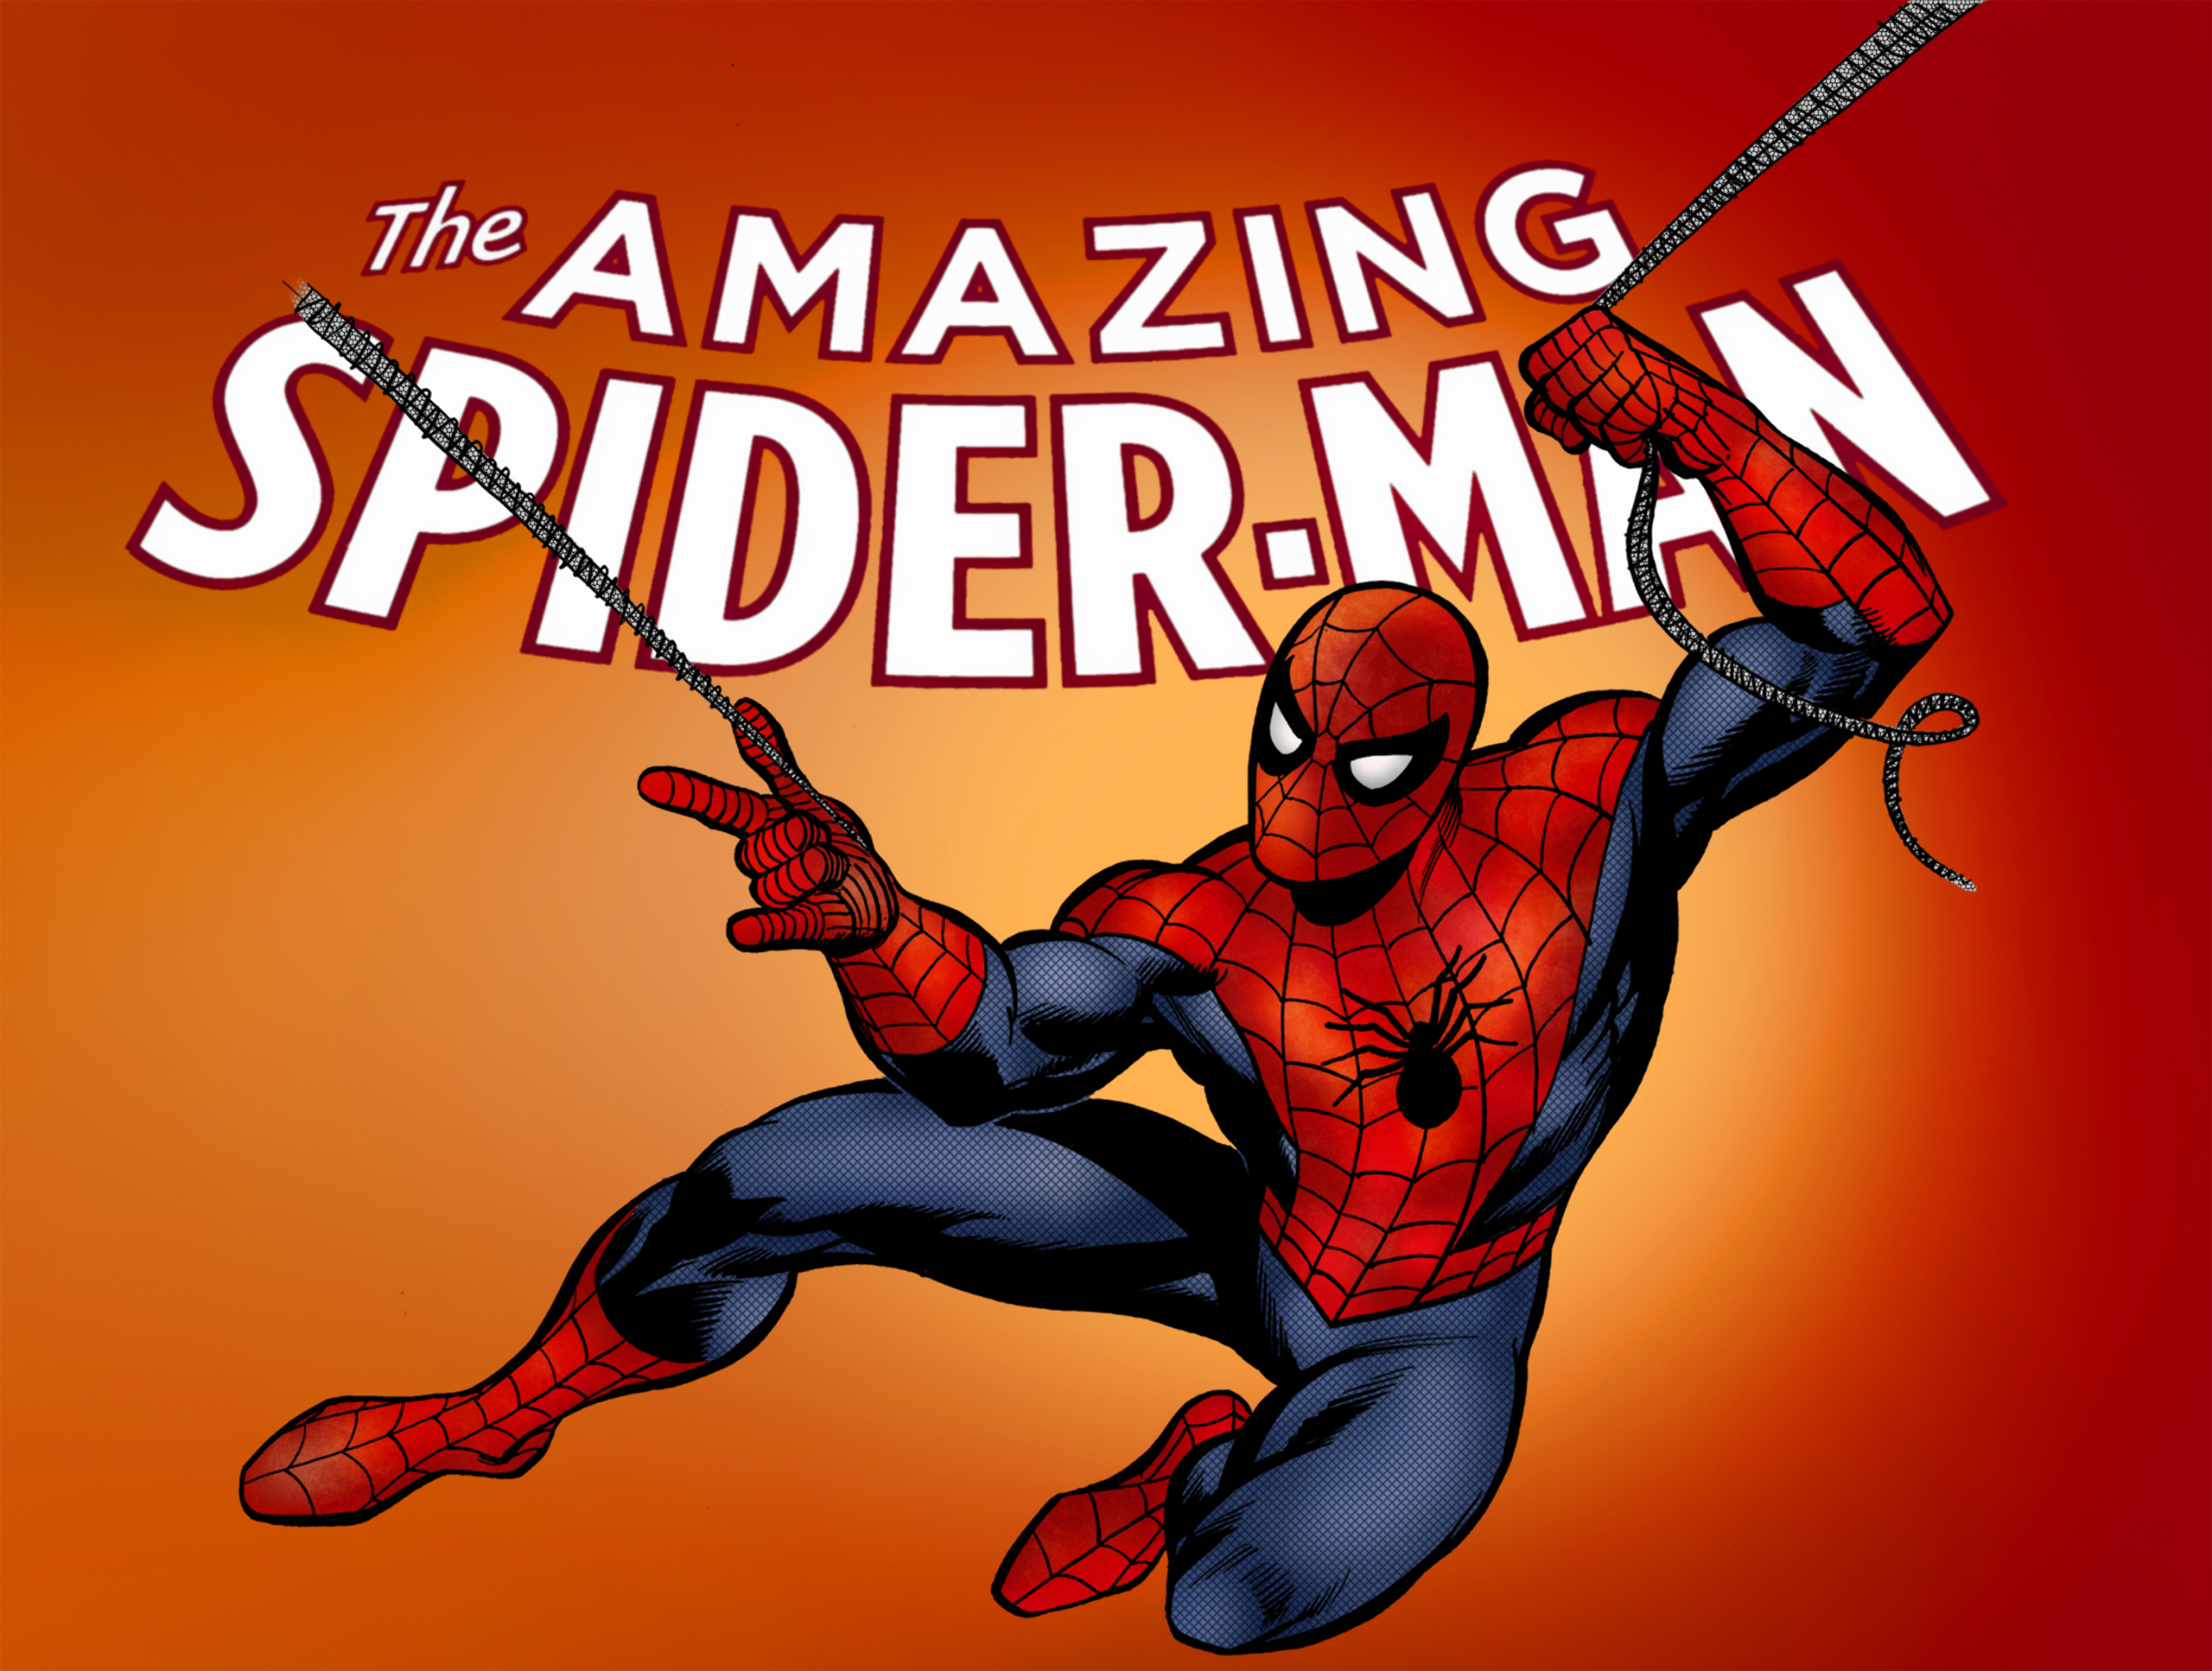 Comics Spider-Man 8k Ultra HD Wallpaper by Mattia F. Ruffo